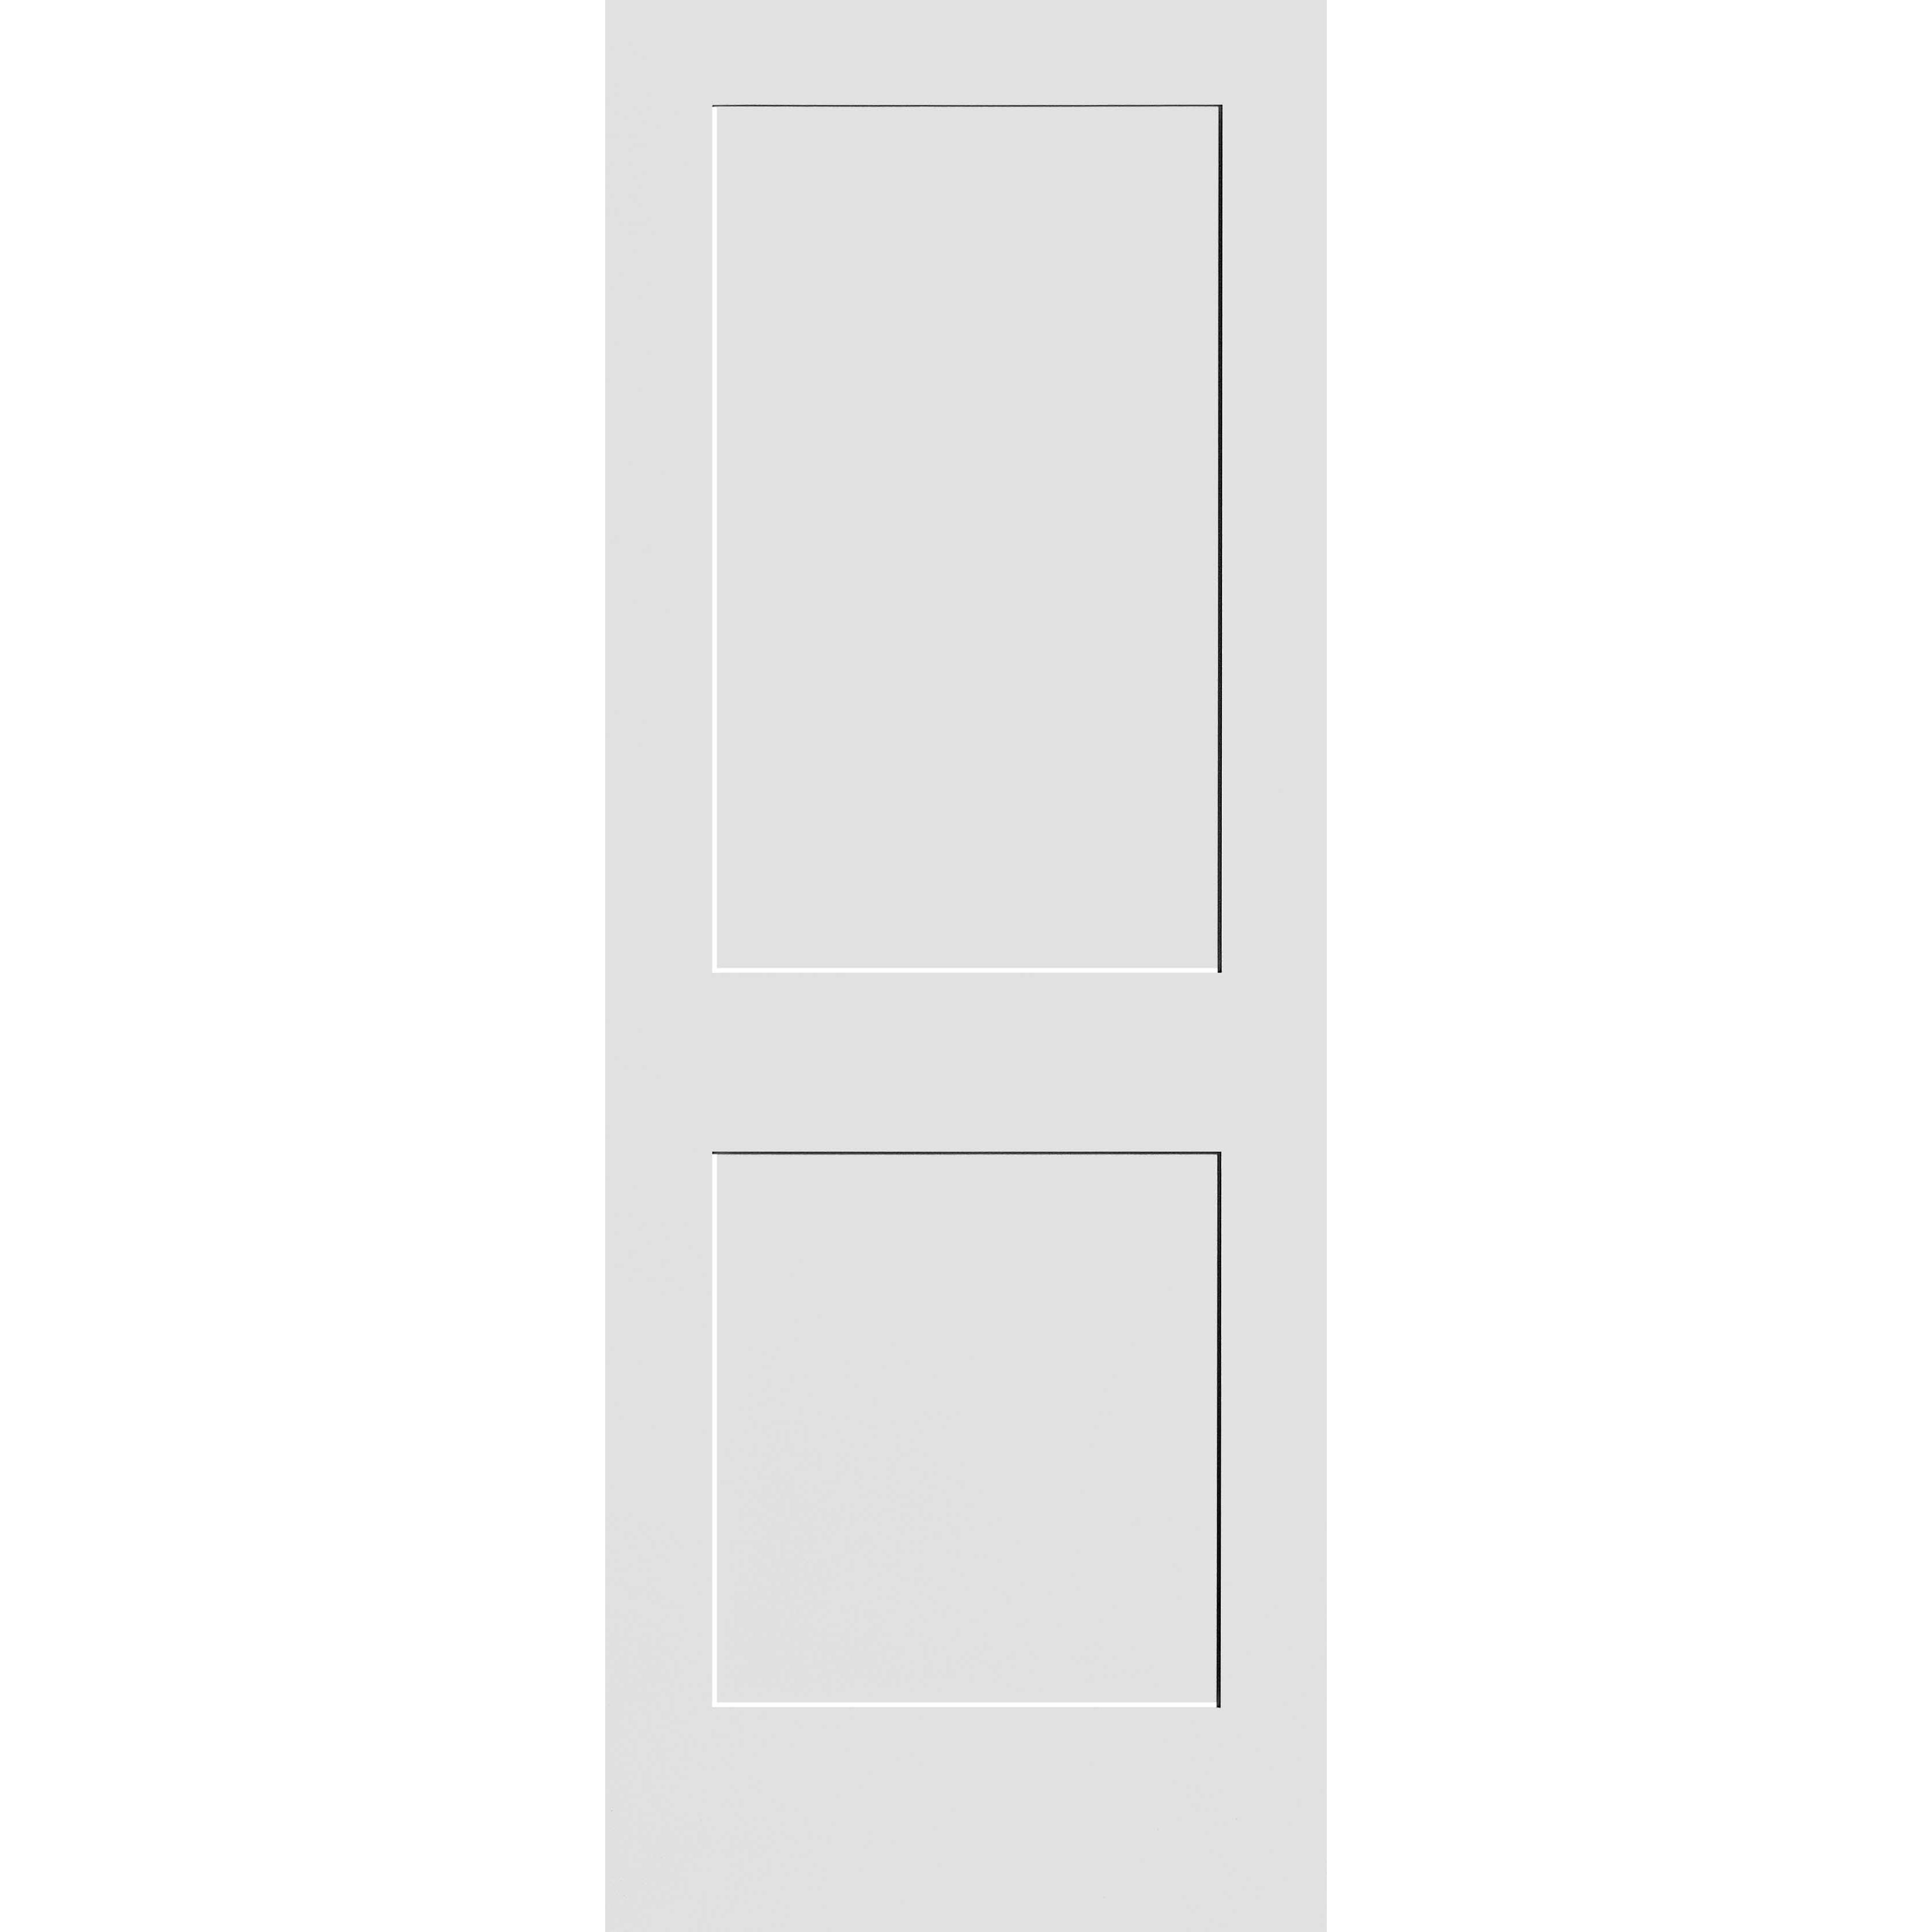 30X84 #8402 MDF PRIMED SHAKER PANEL INTERIOR DOOR 1-3/4 THICKNESS